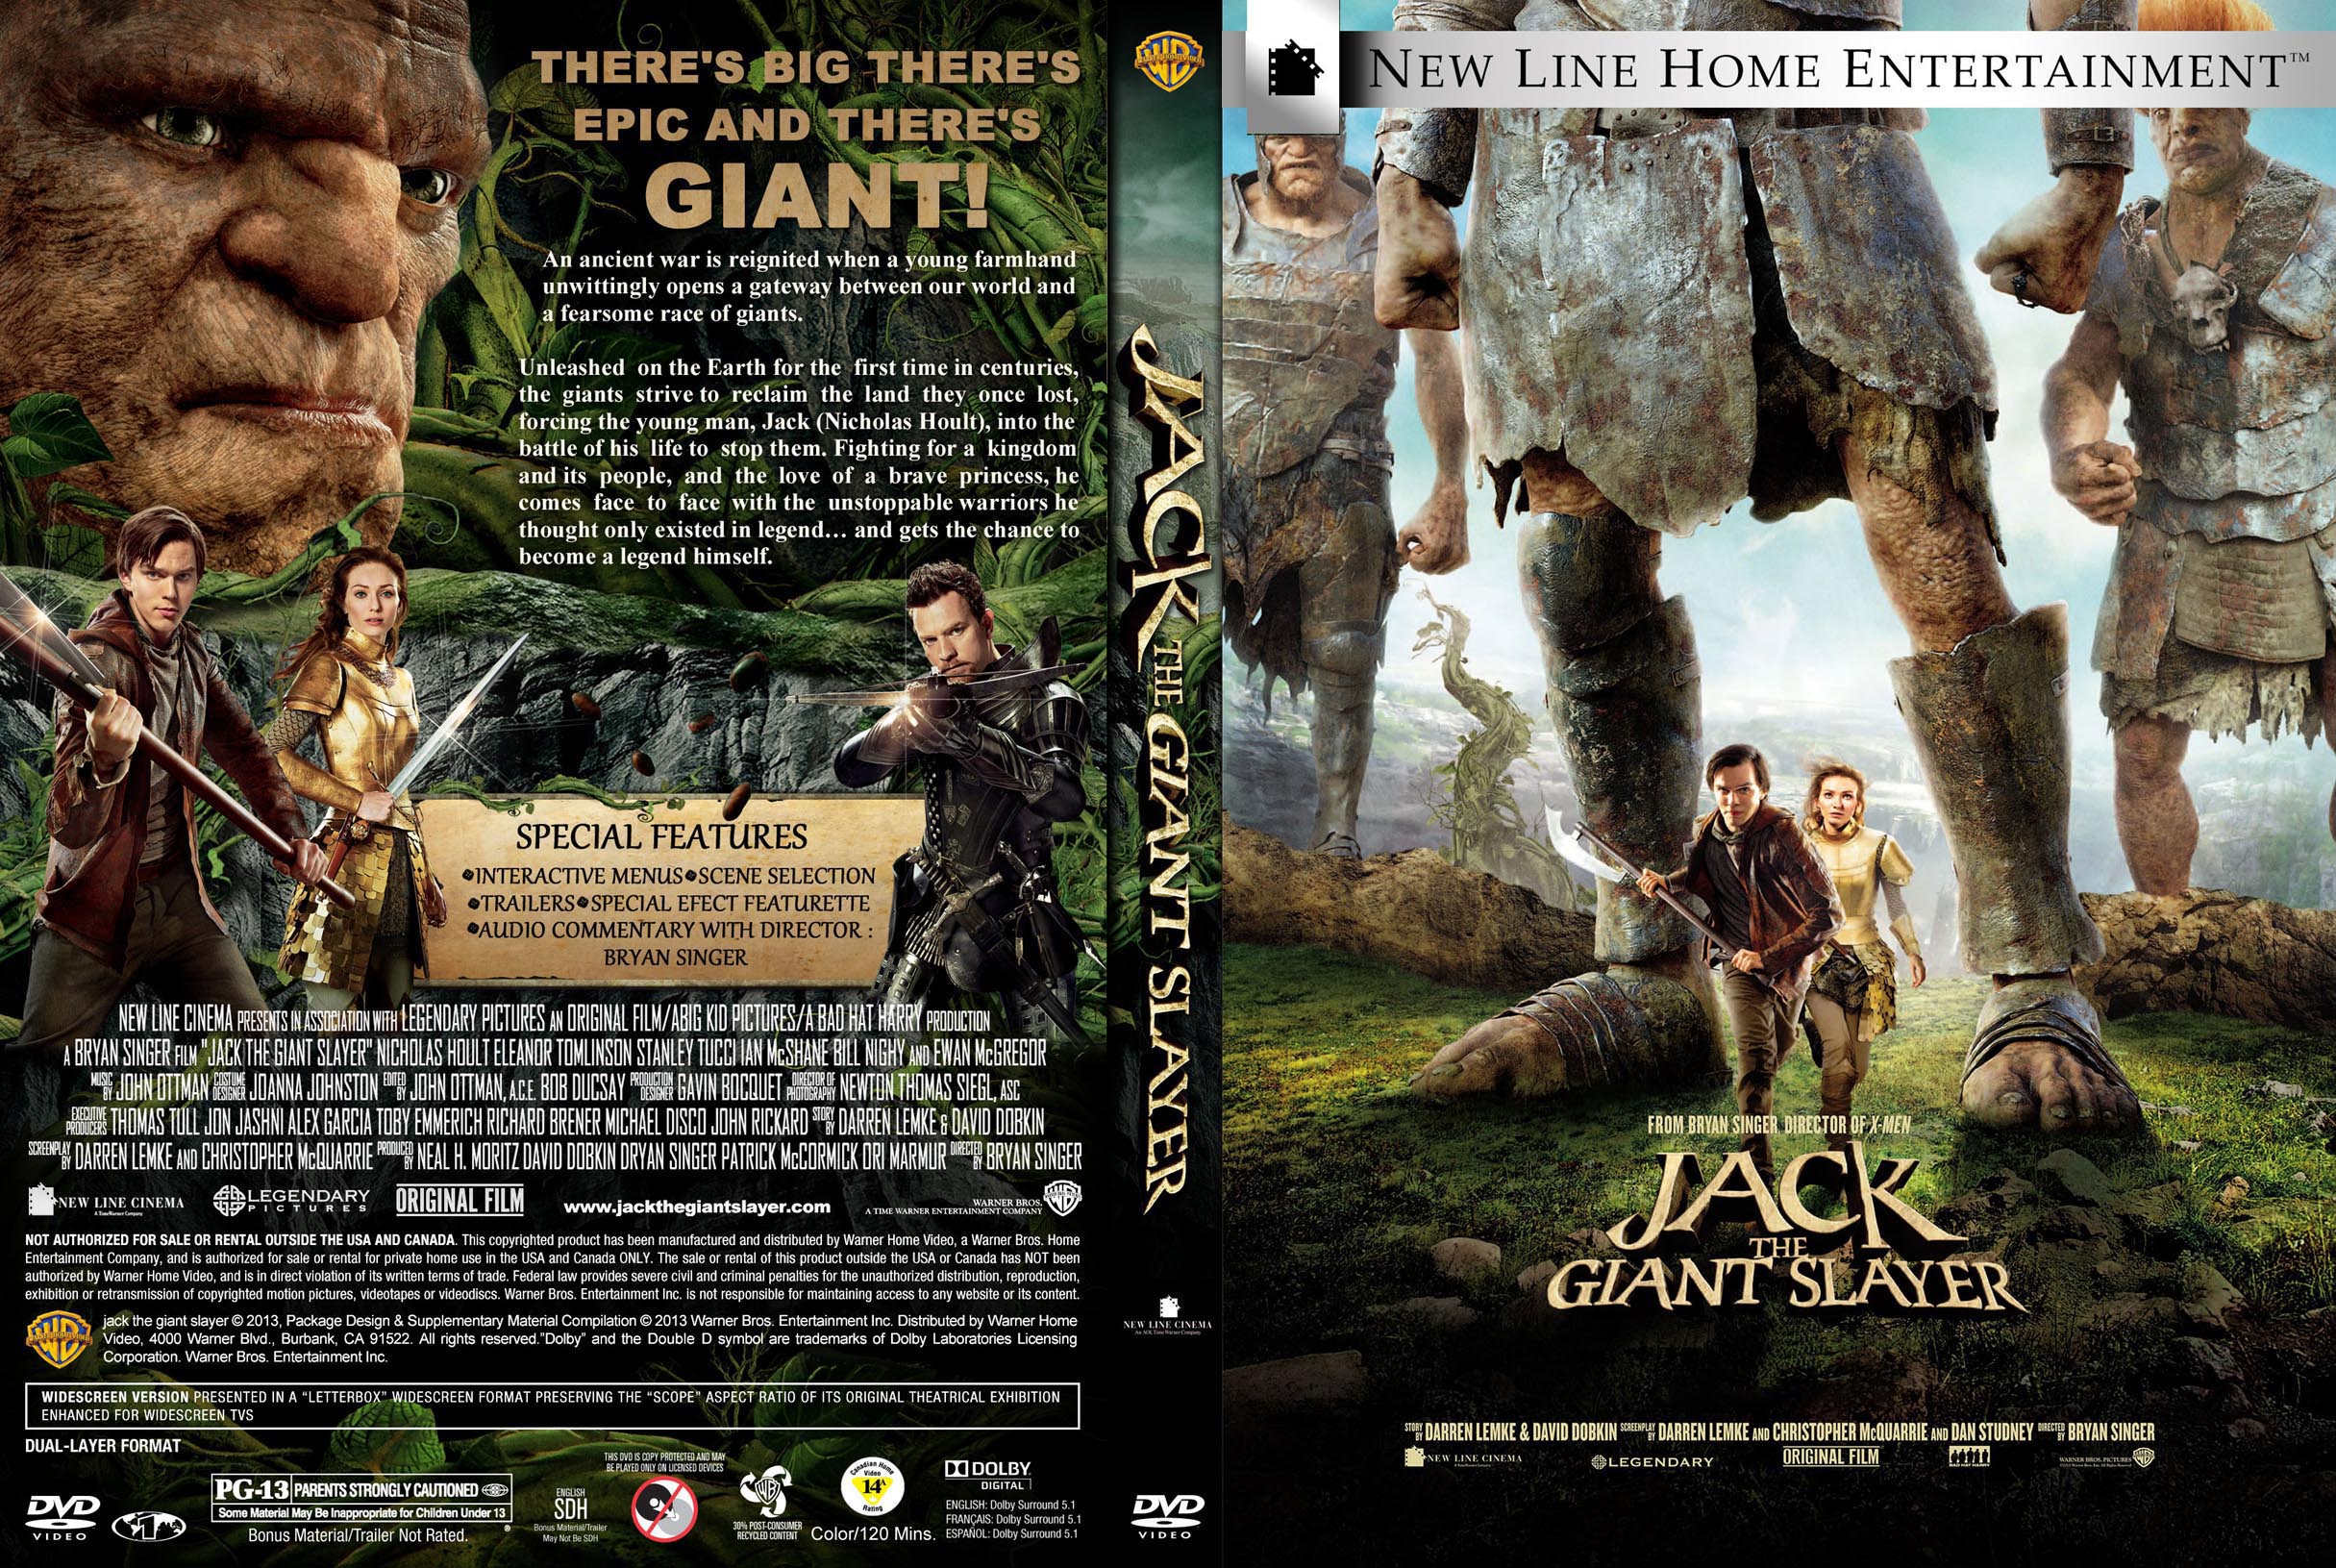 King on jack the giant slayer torrent slim dvd case template psd torrent